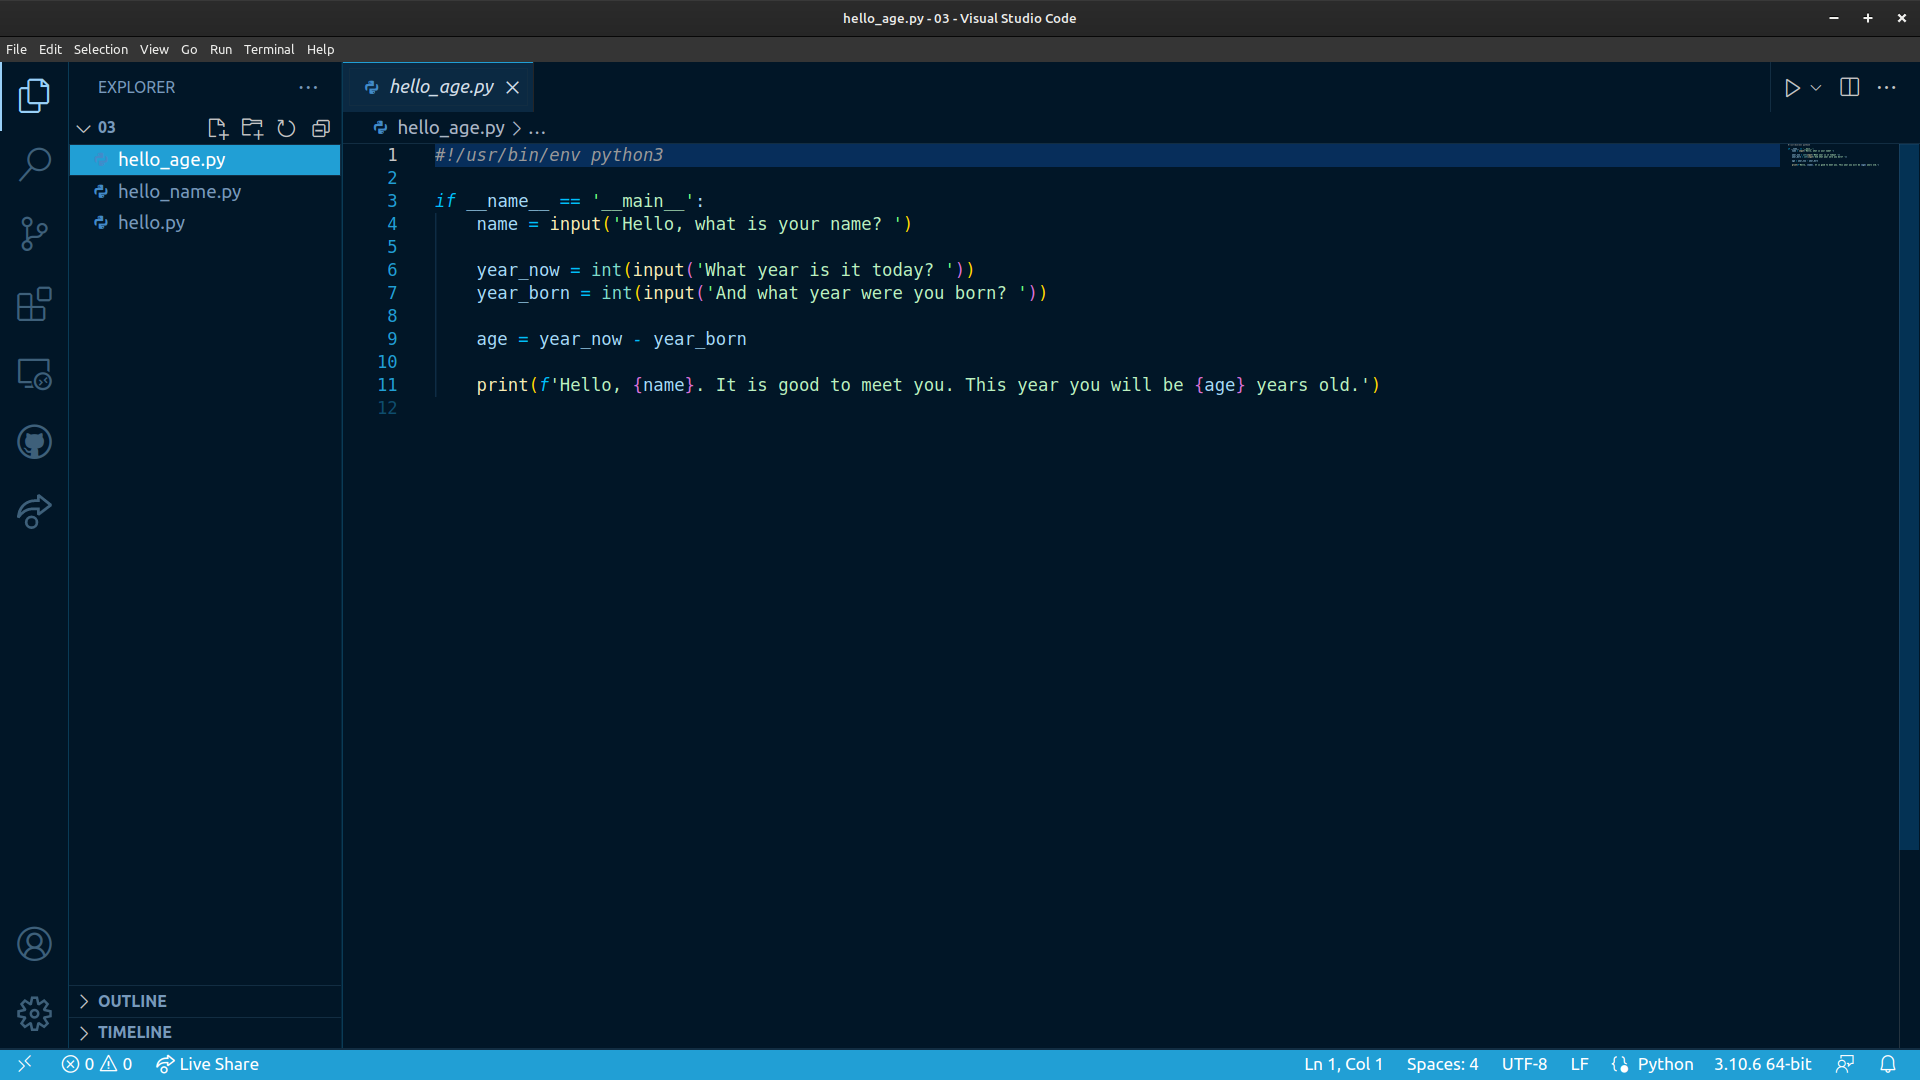 VS Code with Python program open